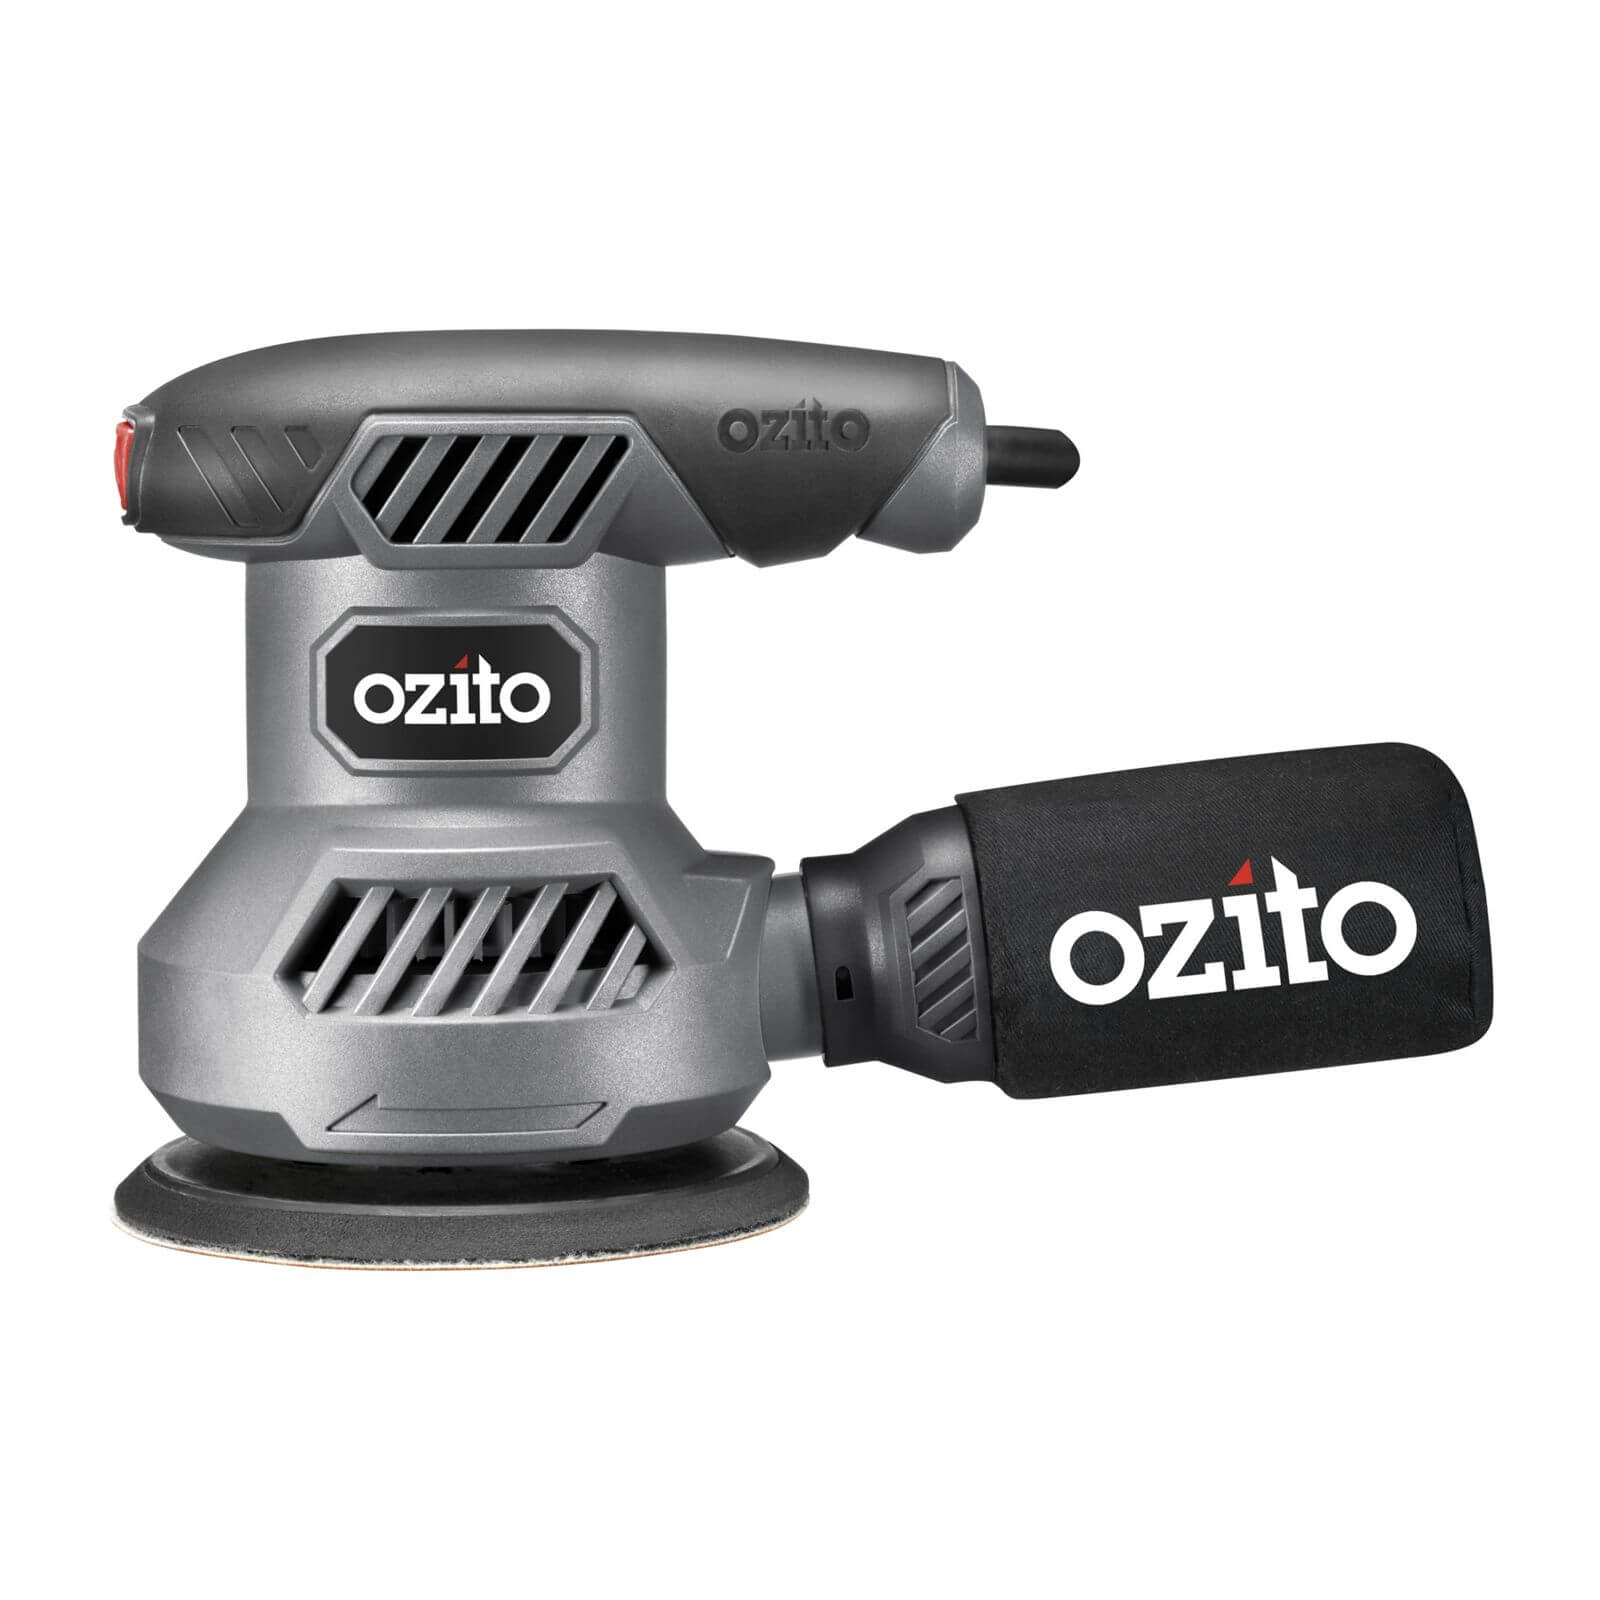 Ozito by Einhell 230W 125mm Random Orbital Sander